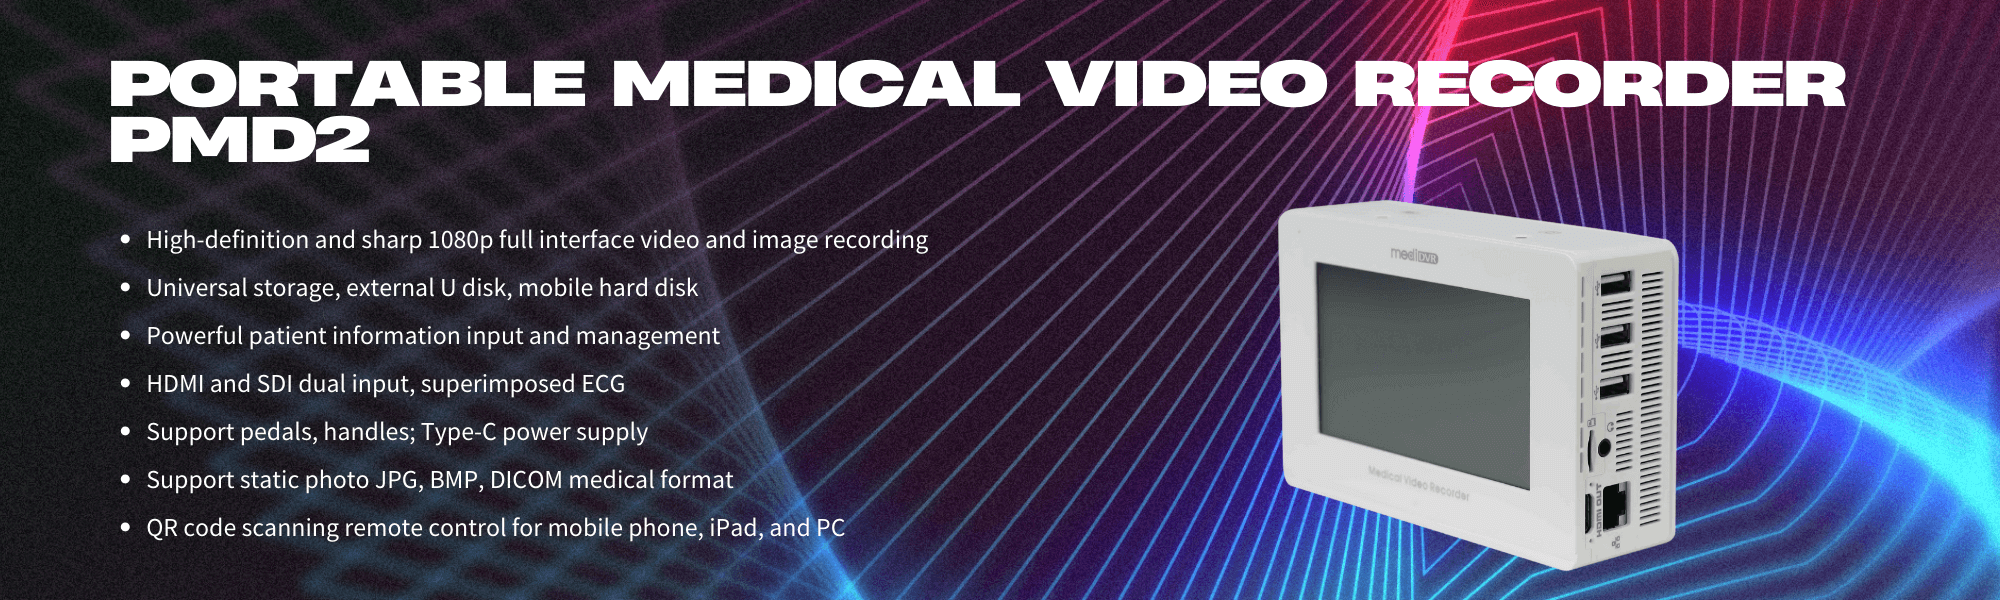 Portable Medical Video recorder